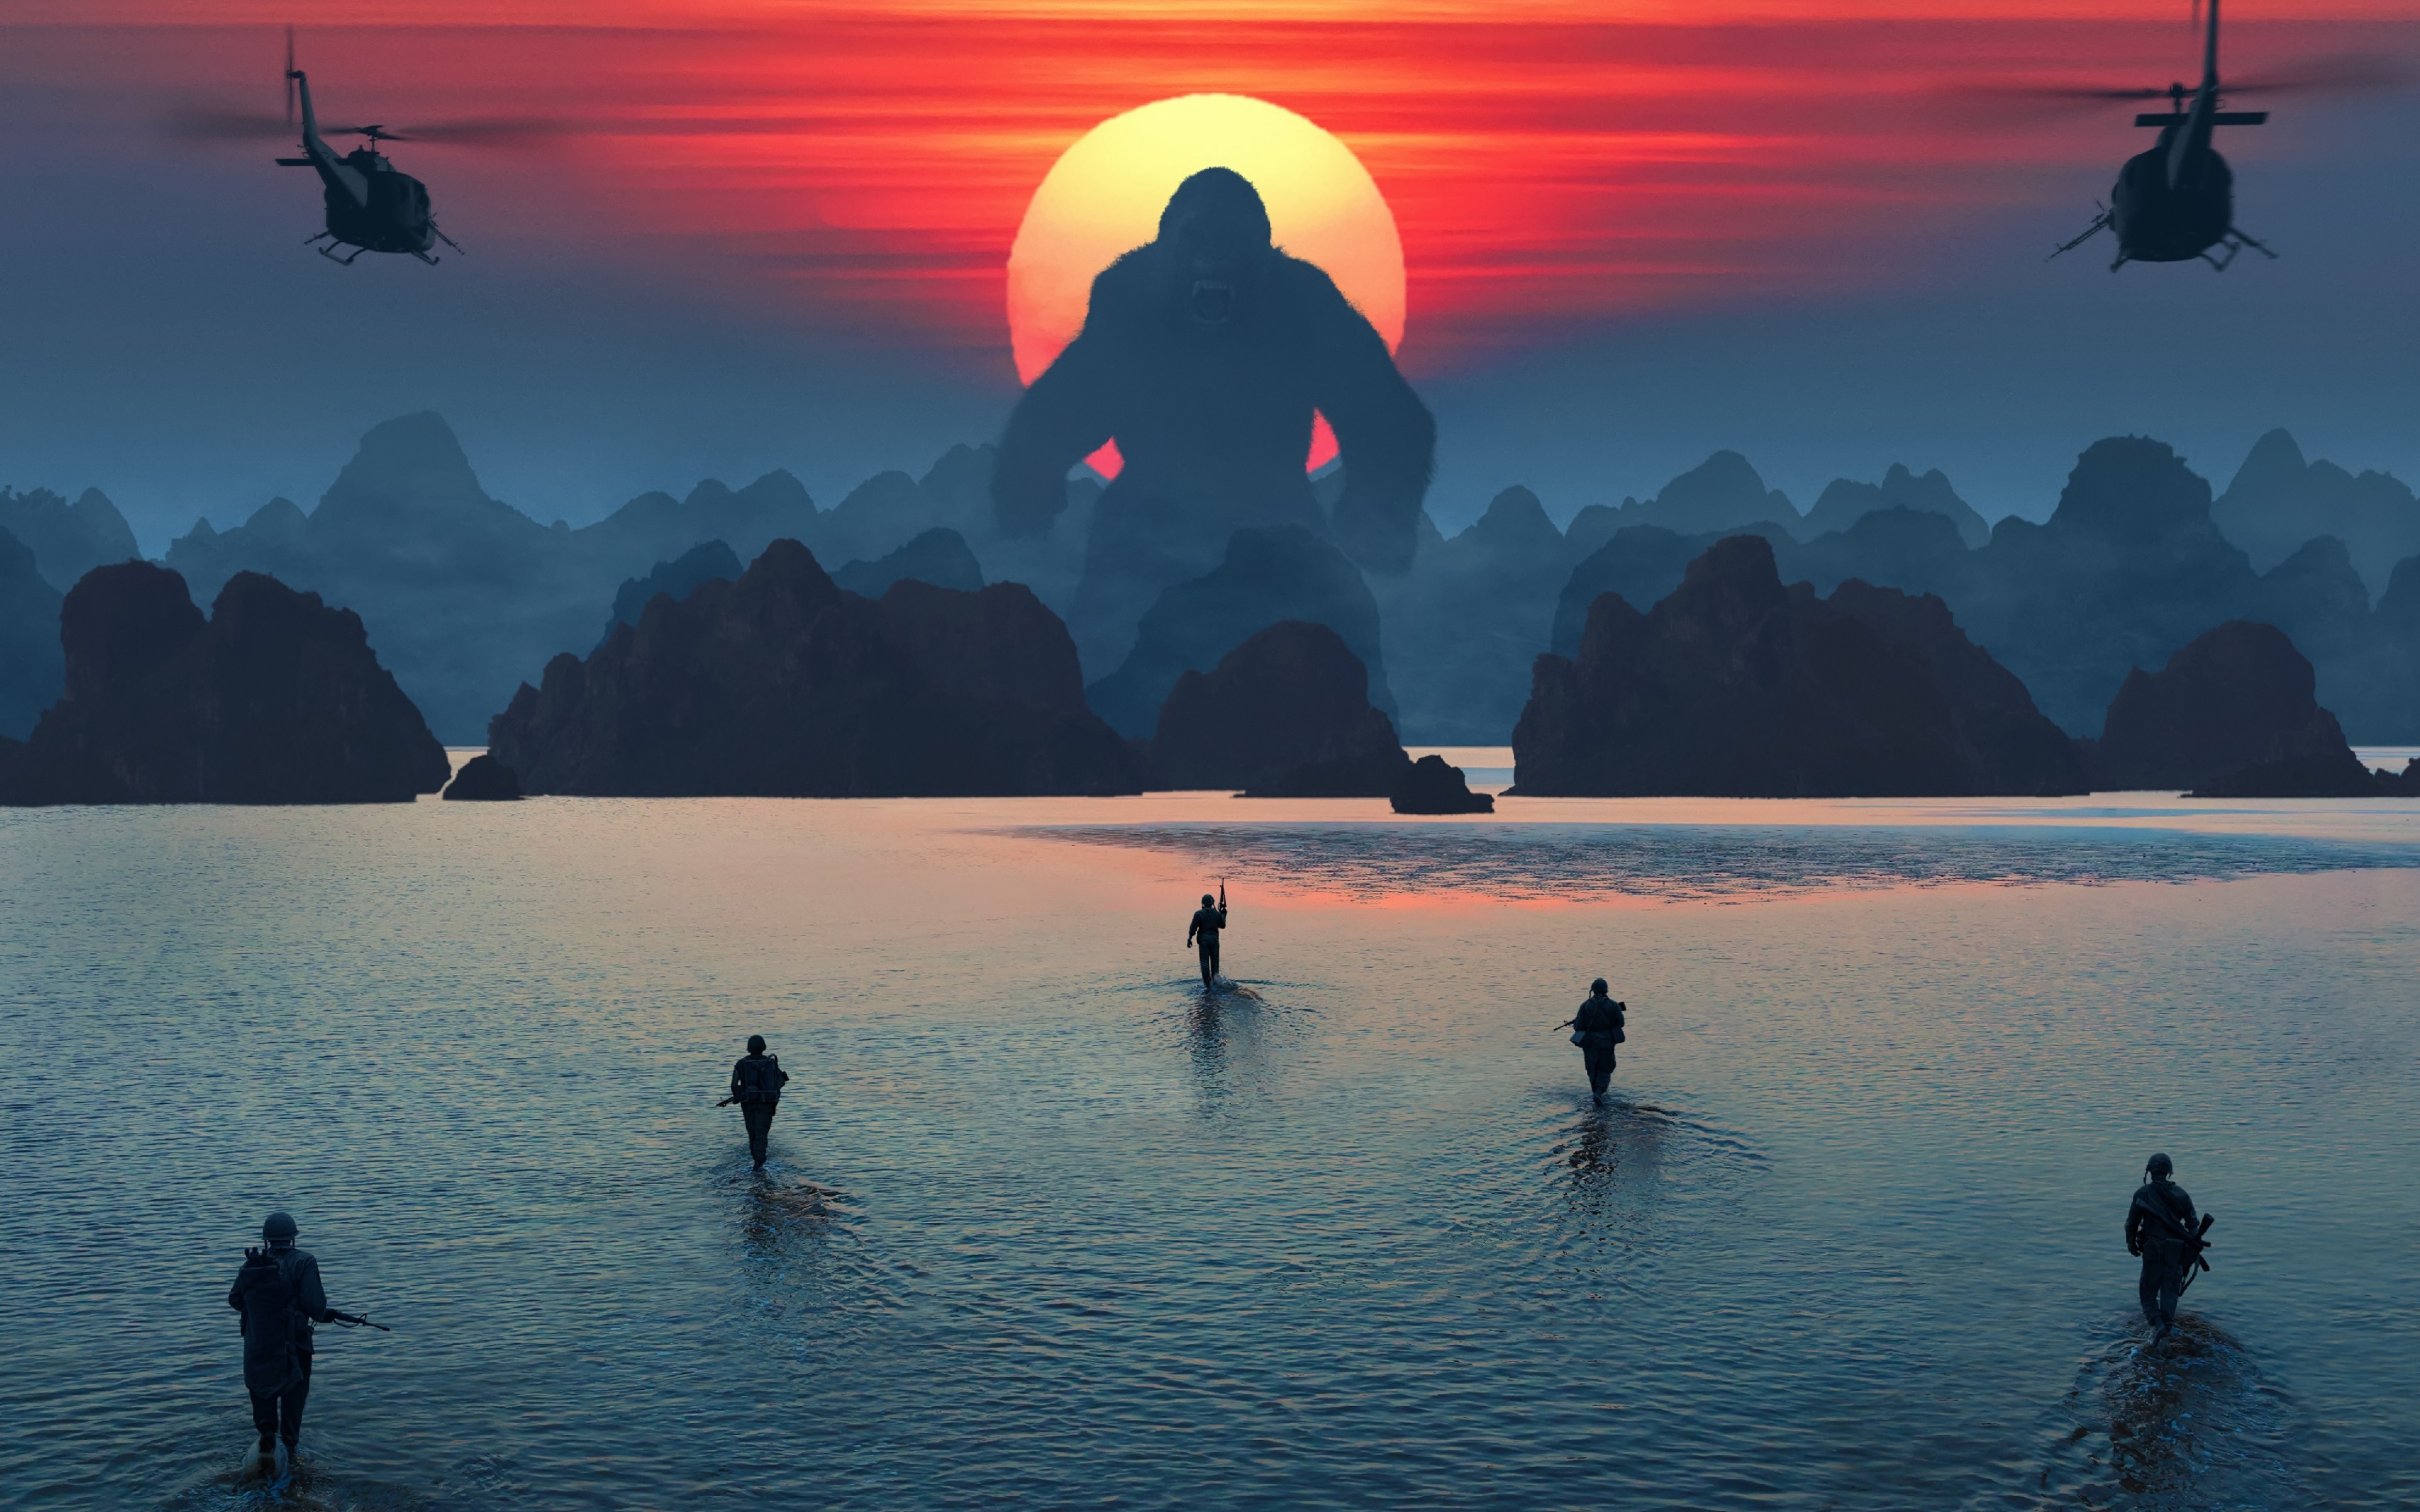 King Kong HD Wallpaper Background Image